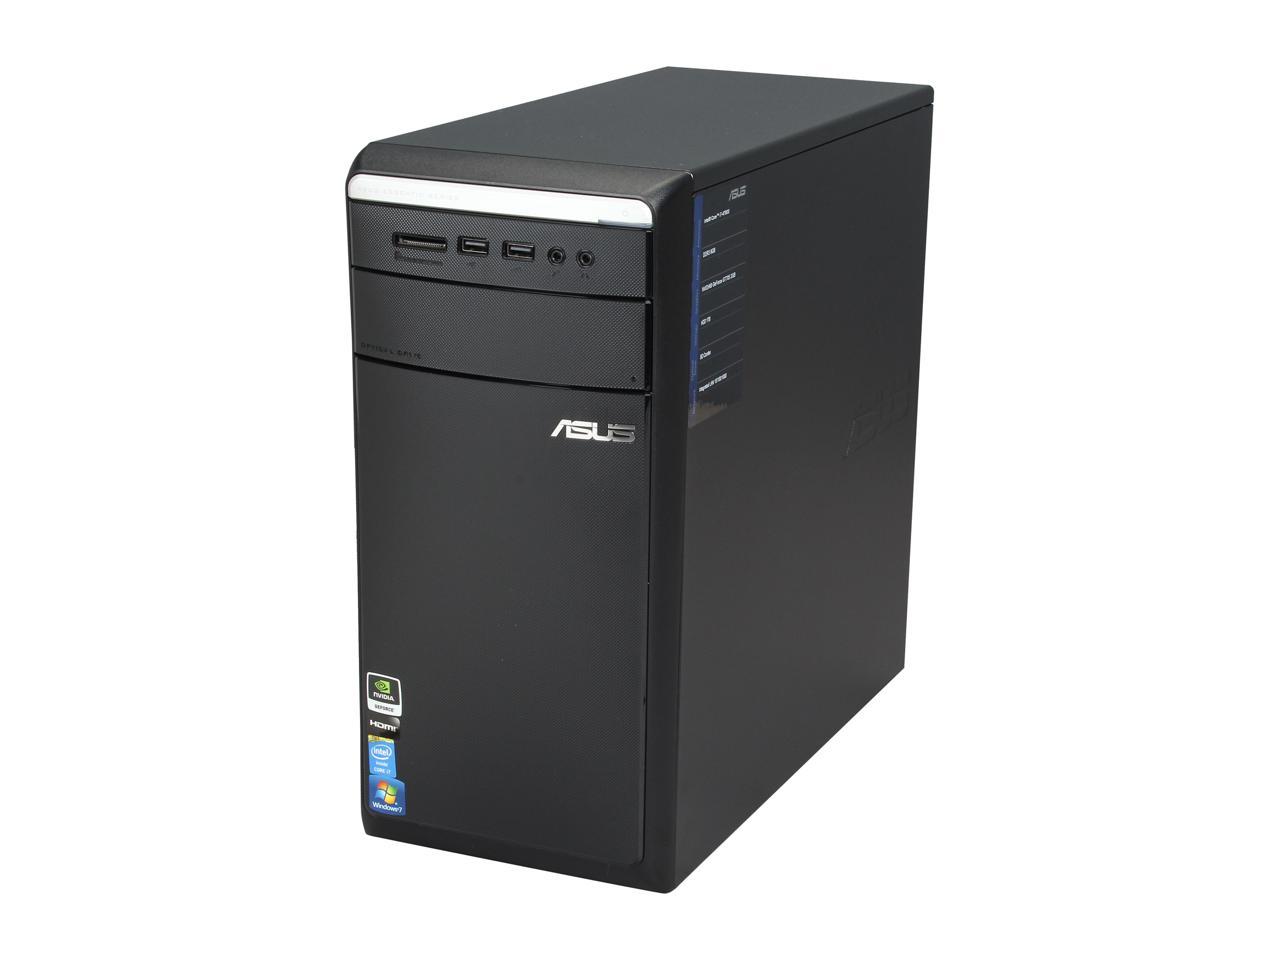 Asus Desktop Pc M11ad Us007q Intel Core I7 4790s 320ghz 8gb Ddr3 1tb